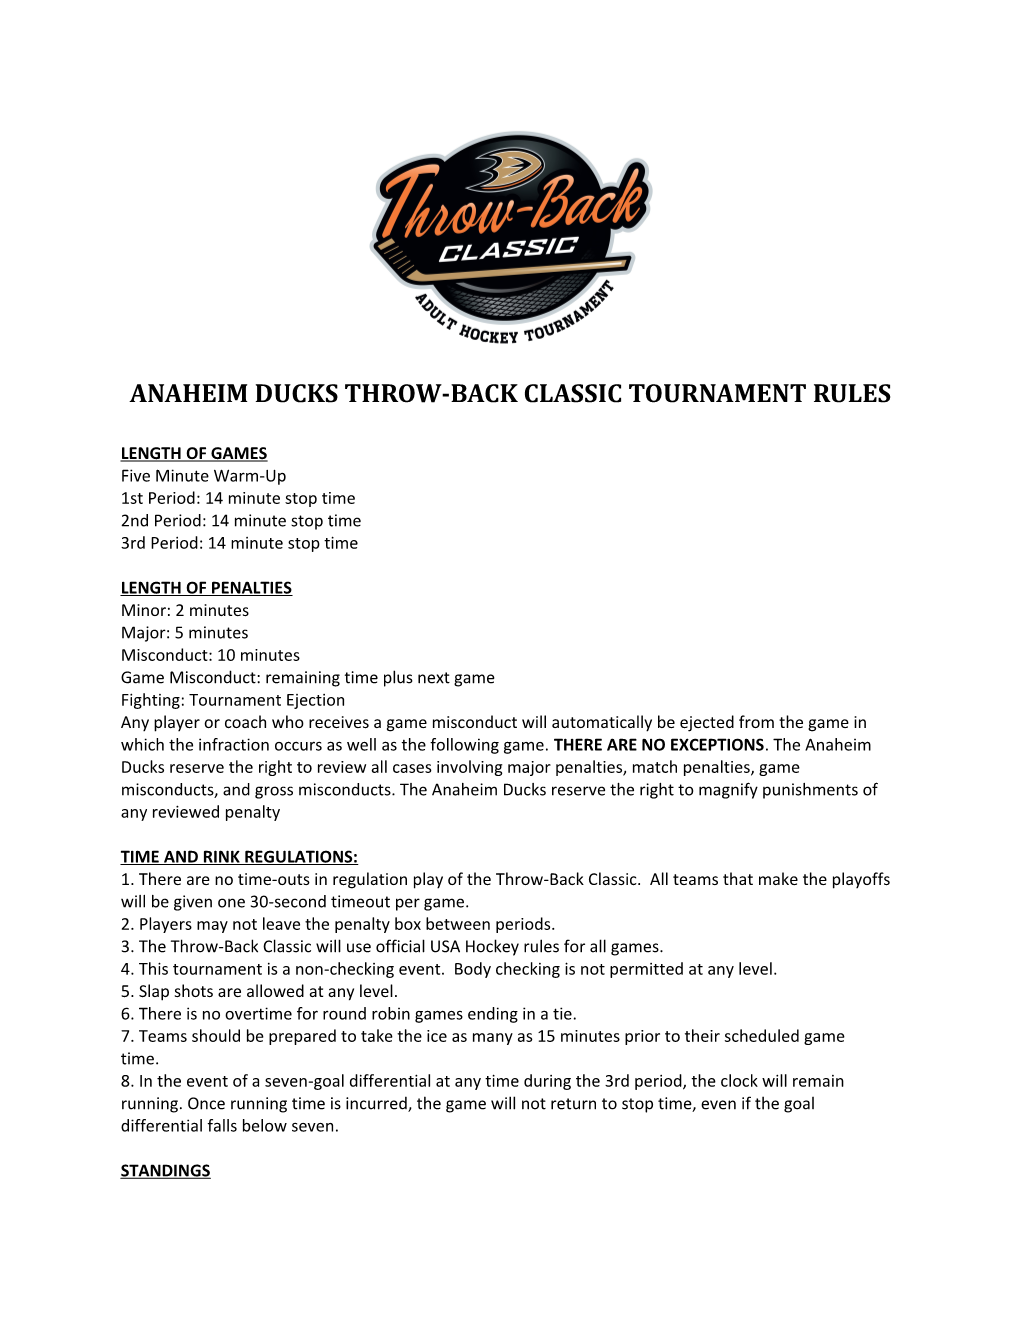 Anaheim Ducks Throw-Back Classic Tournament Rules